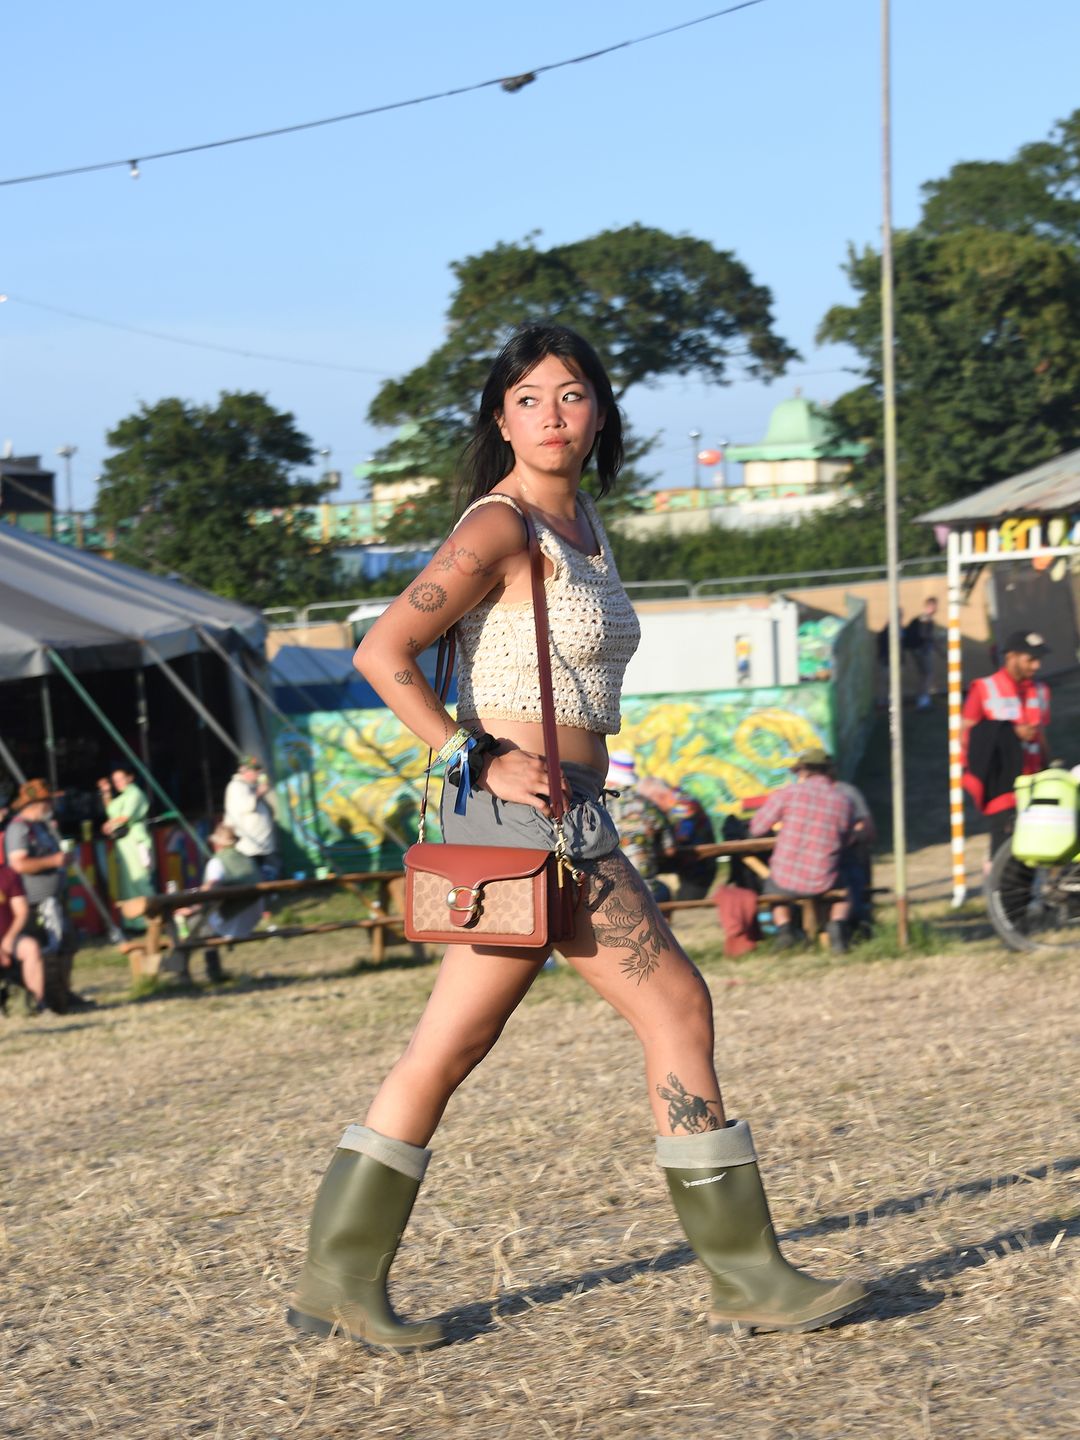 Singer Beabadoobee attends day three of the Glastonbury Festival